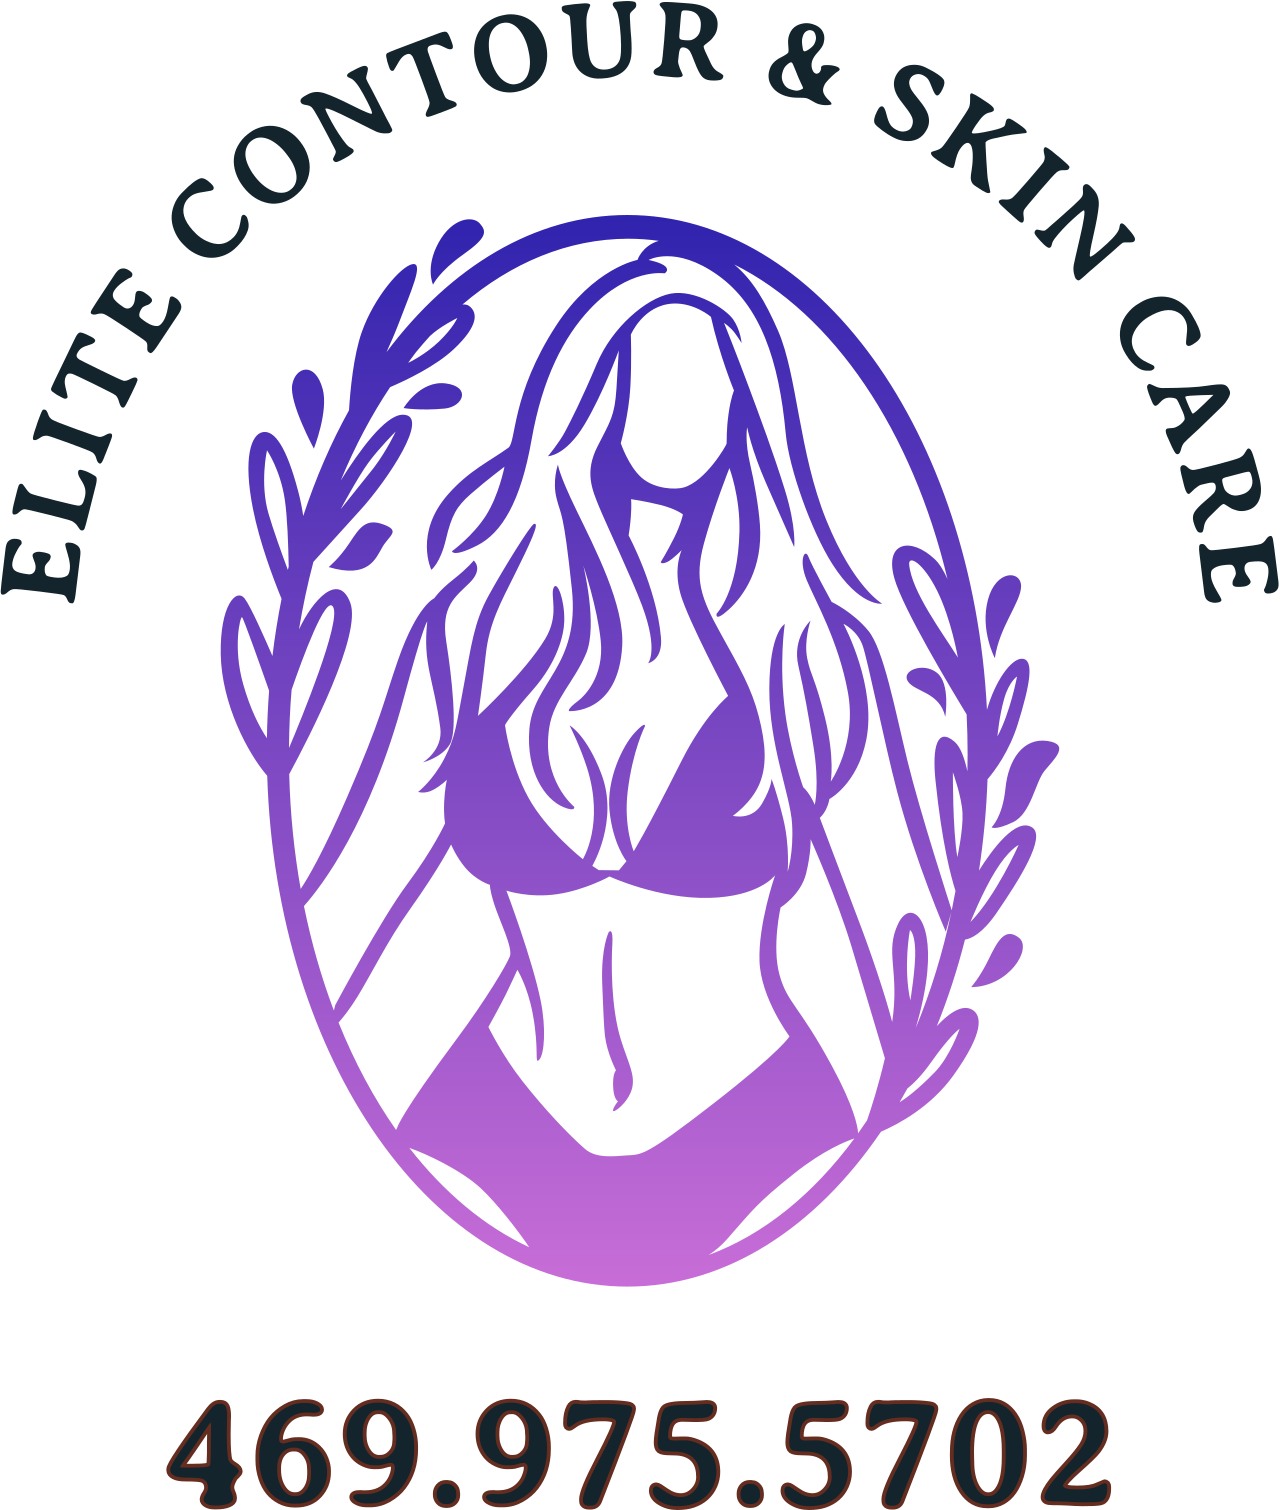 ELITE CONTOUR & Skin care's logo